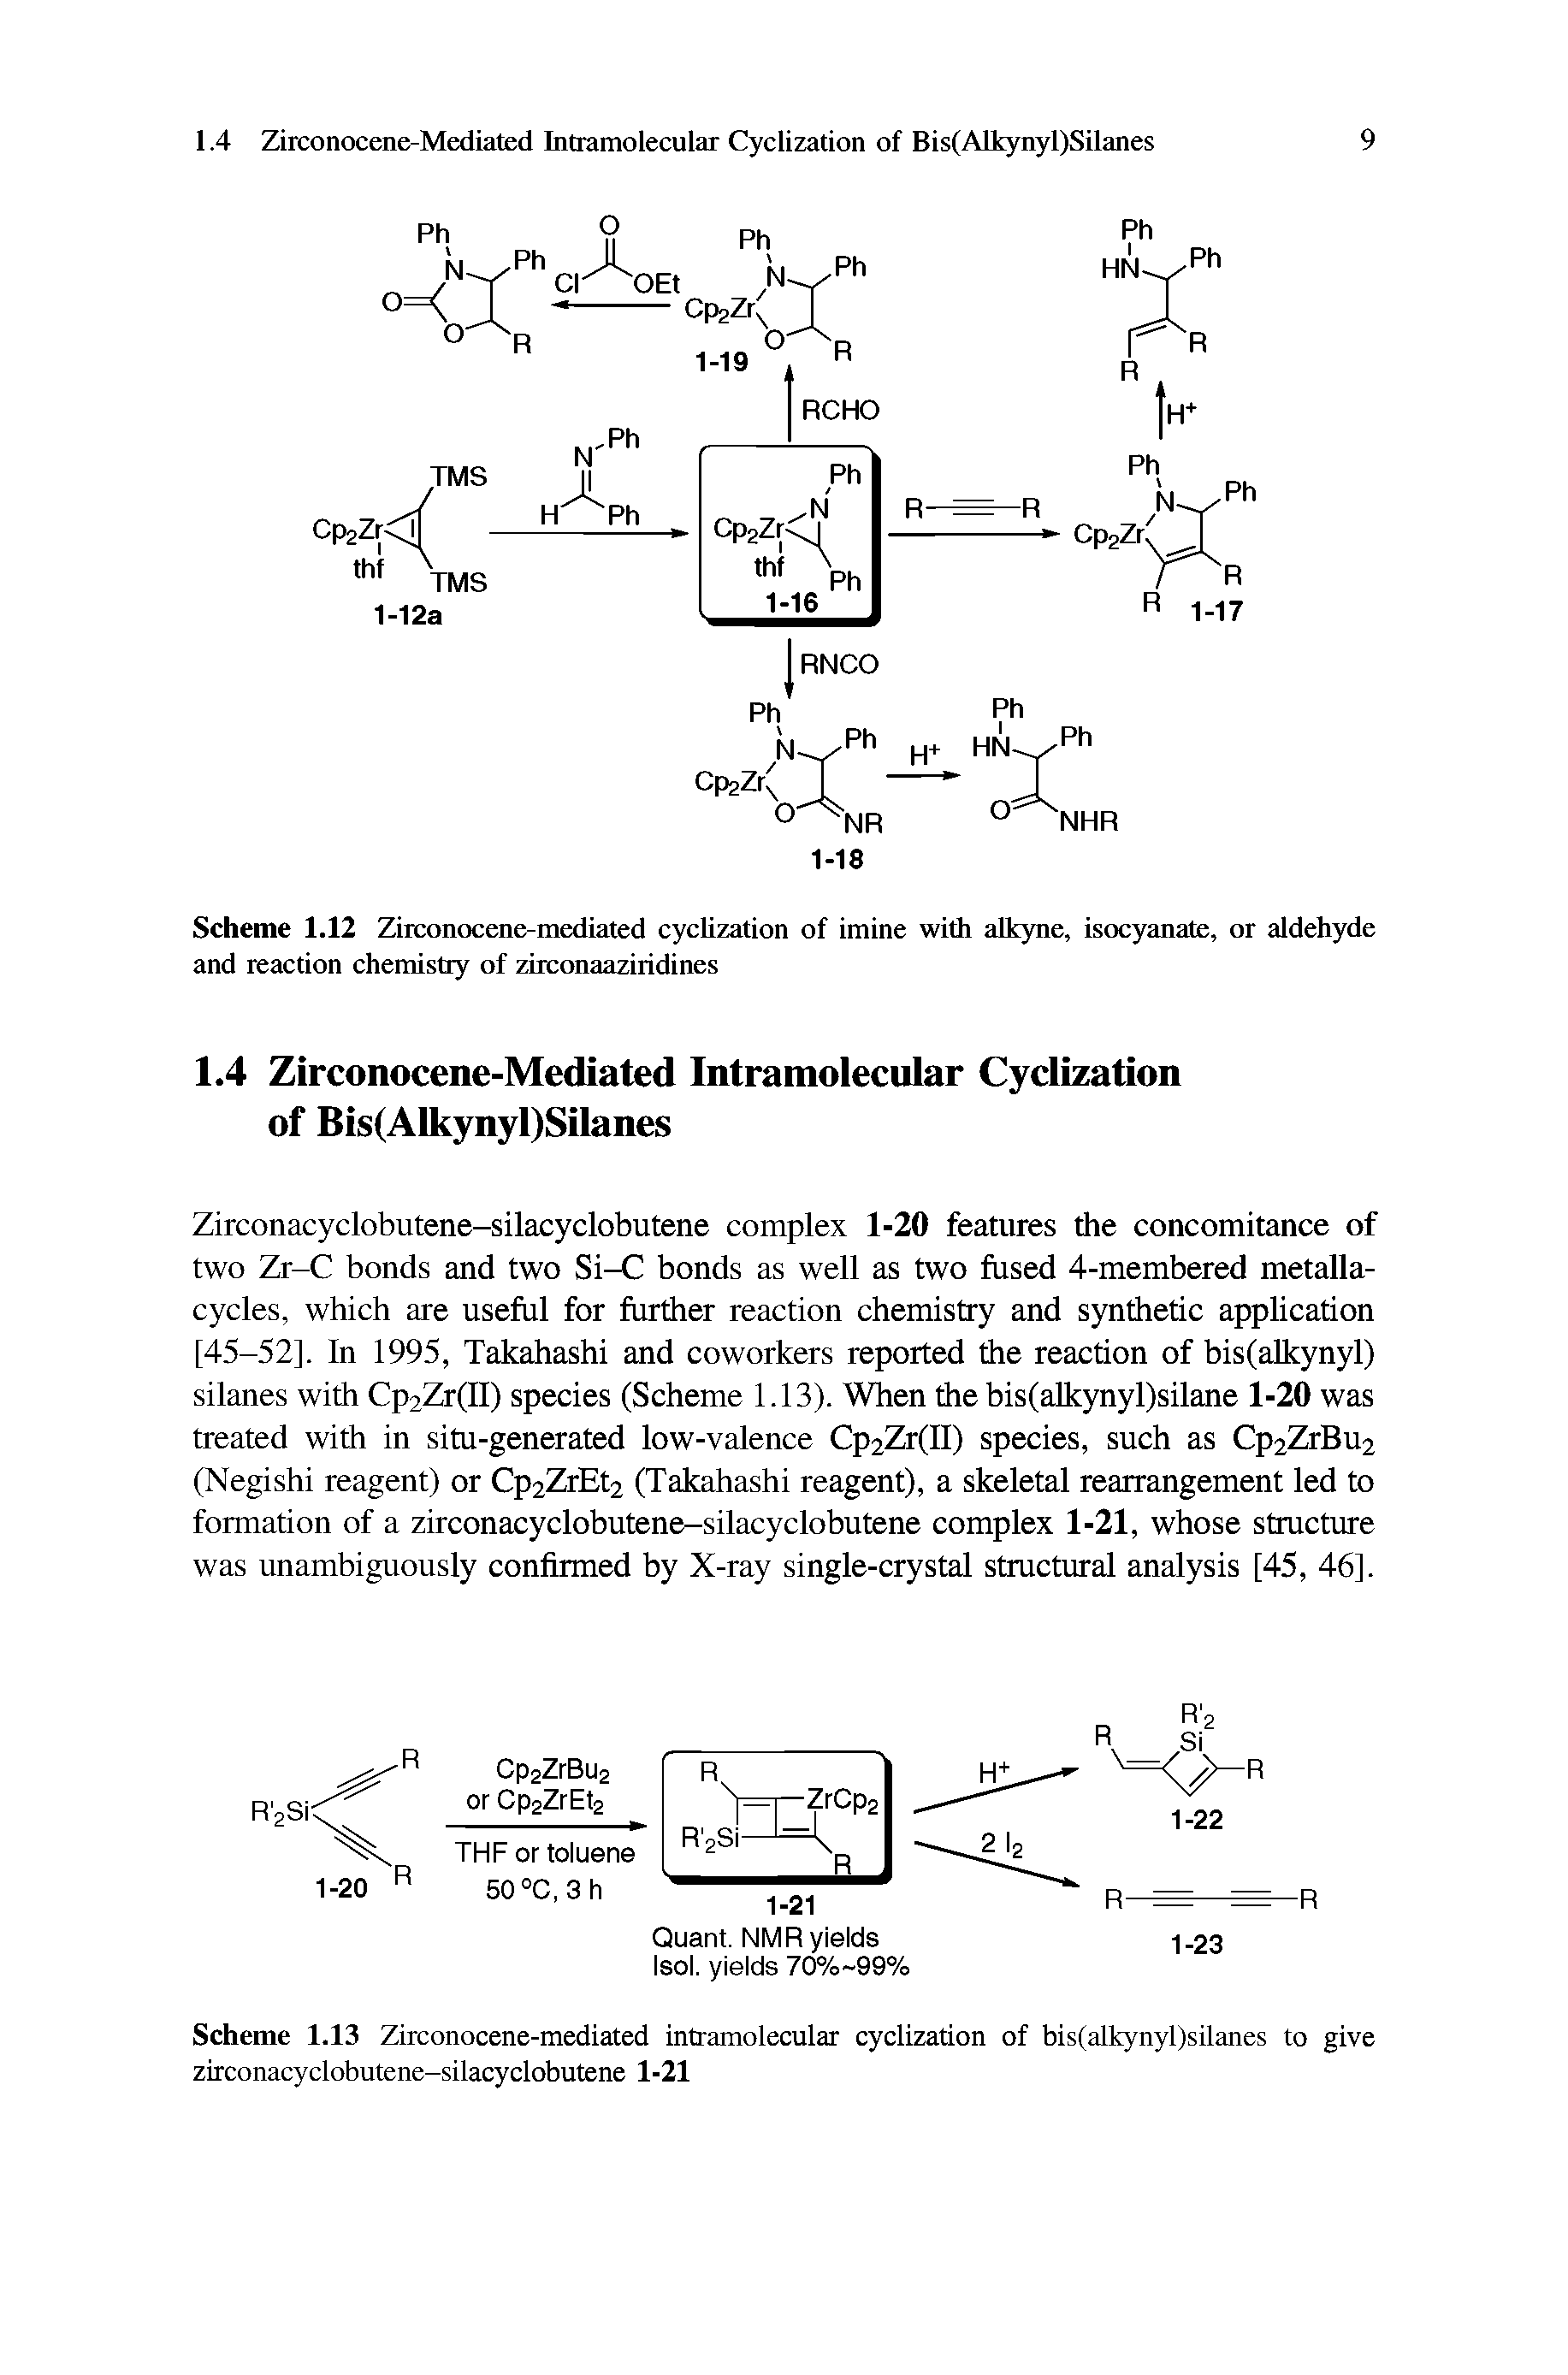 Scheme 1.12 Zirconocene-mediated cyclization of imine with alkyne, isocyanate, or aldehyde and reaction chemistry of zirconaaziridines...